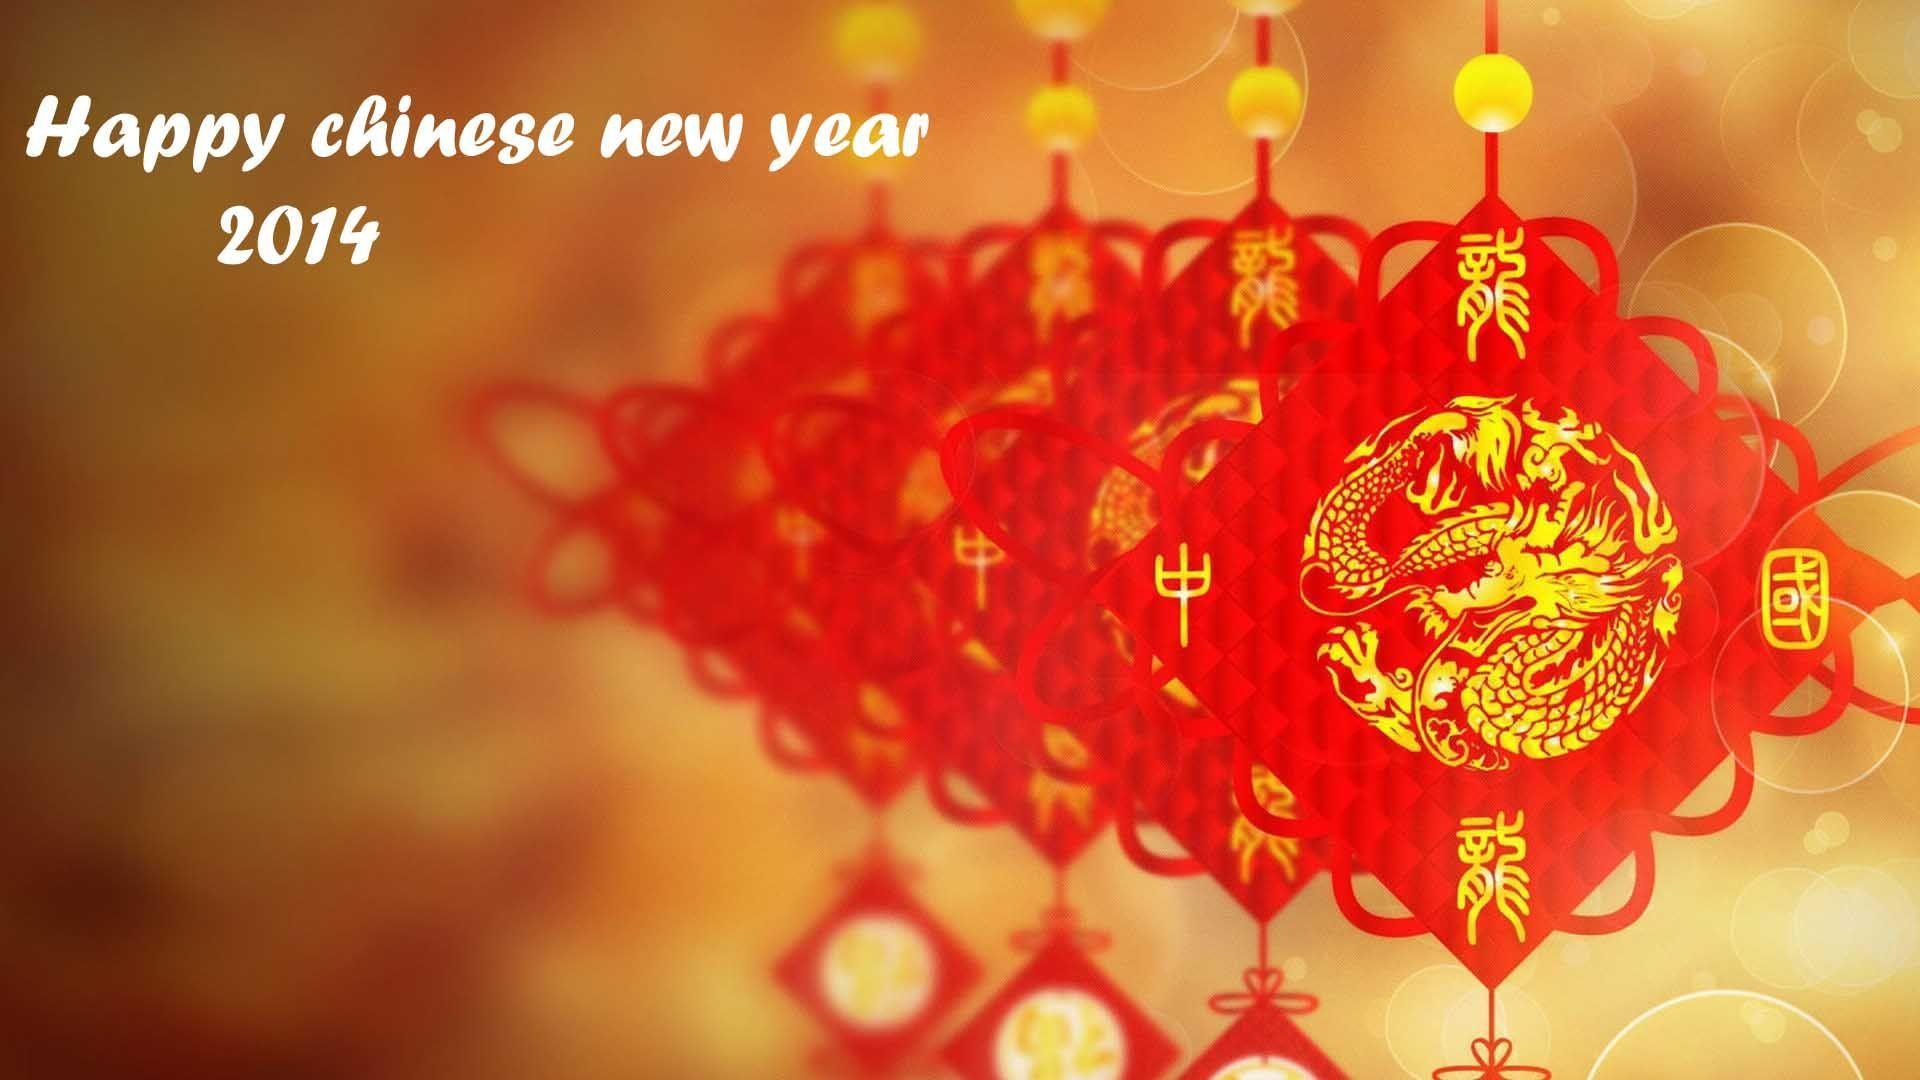 chinese new year wallpaper 2014 desktop background. High